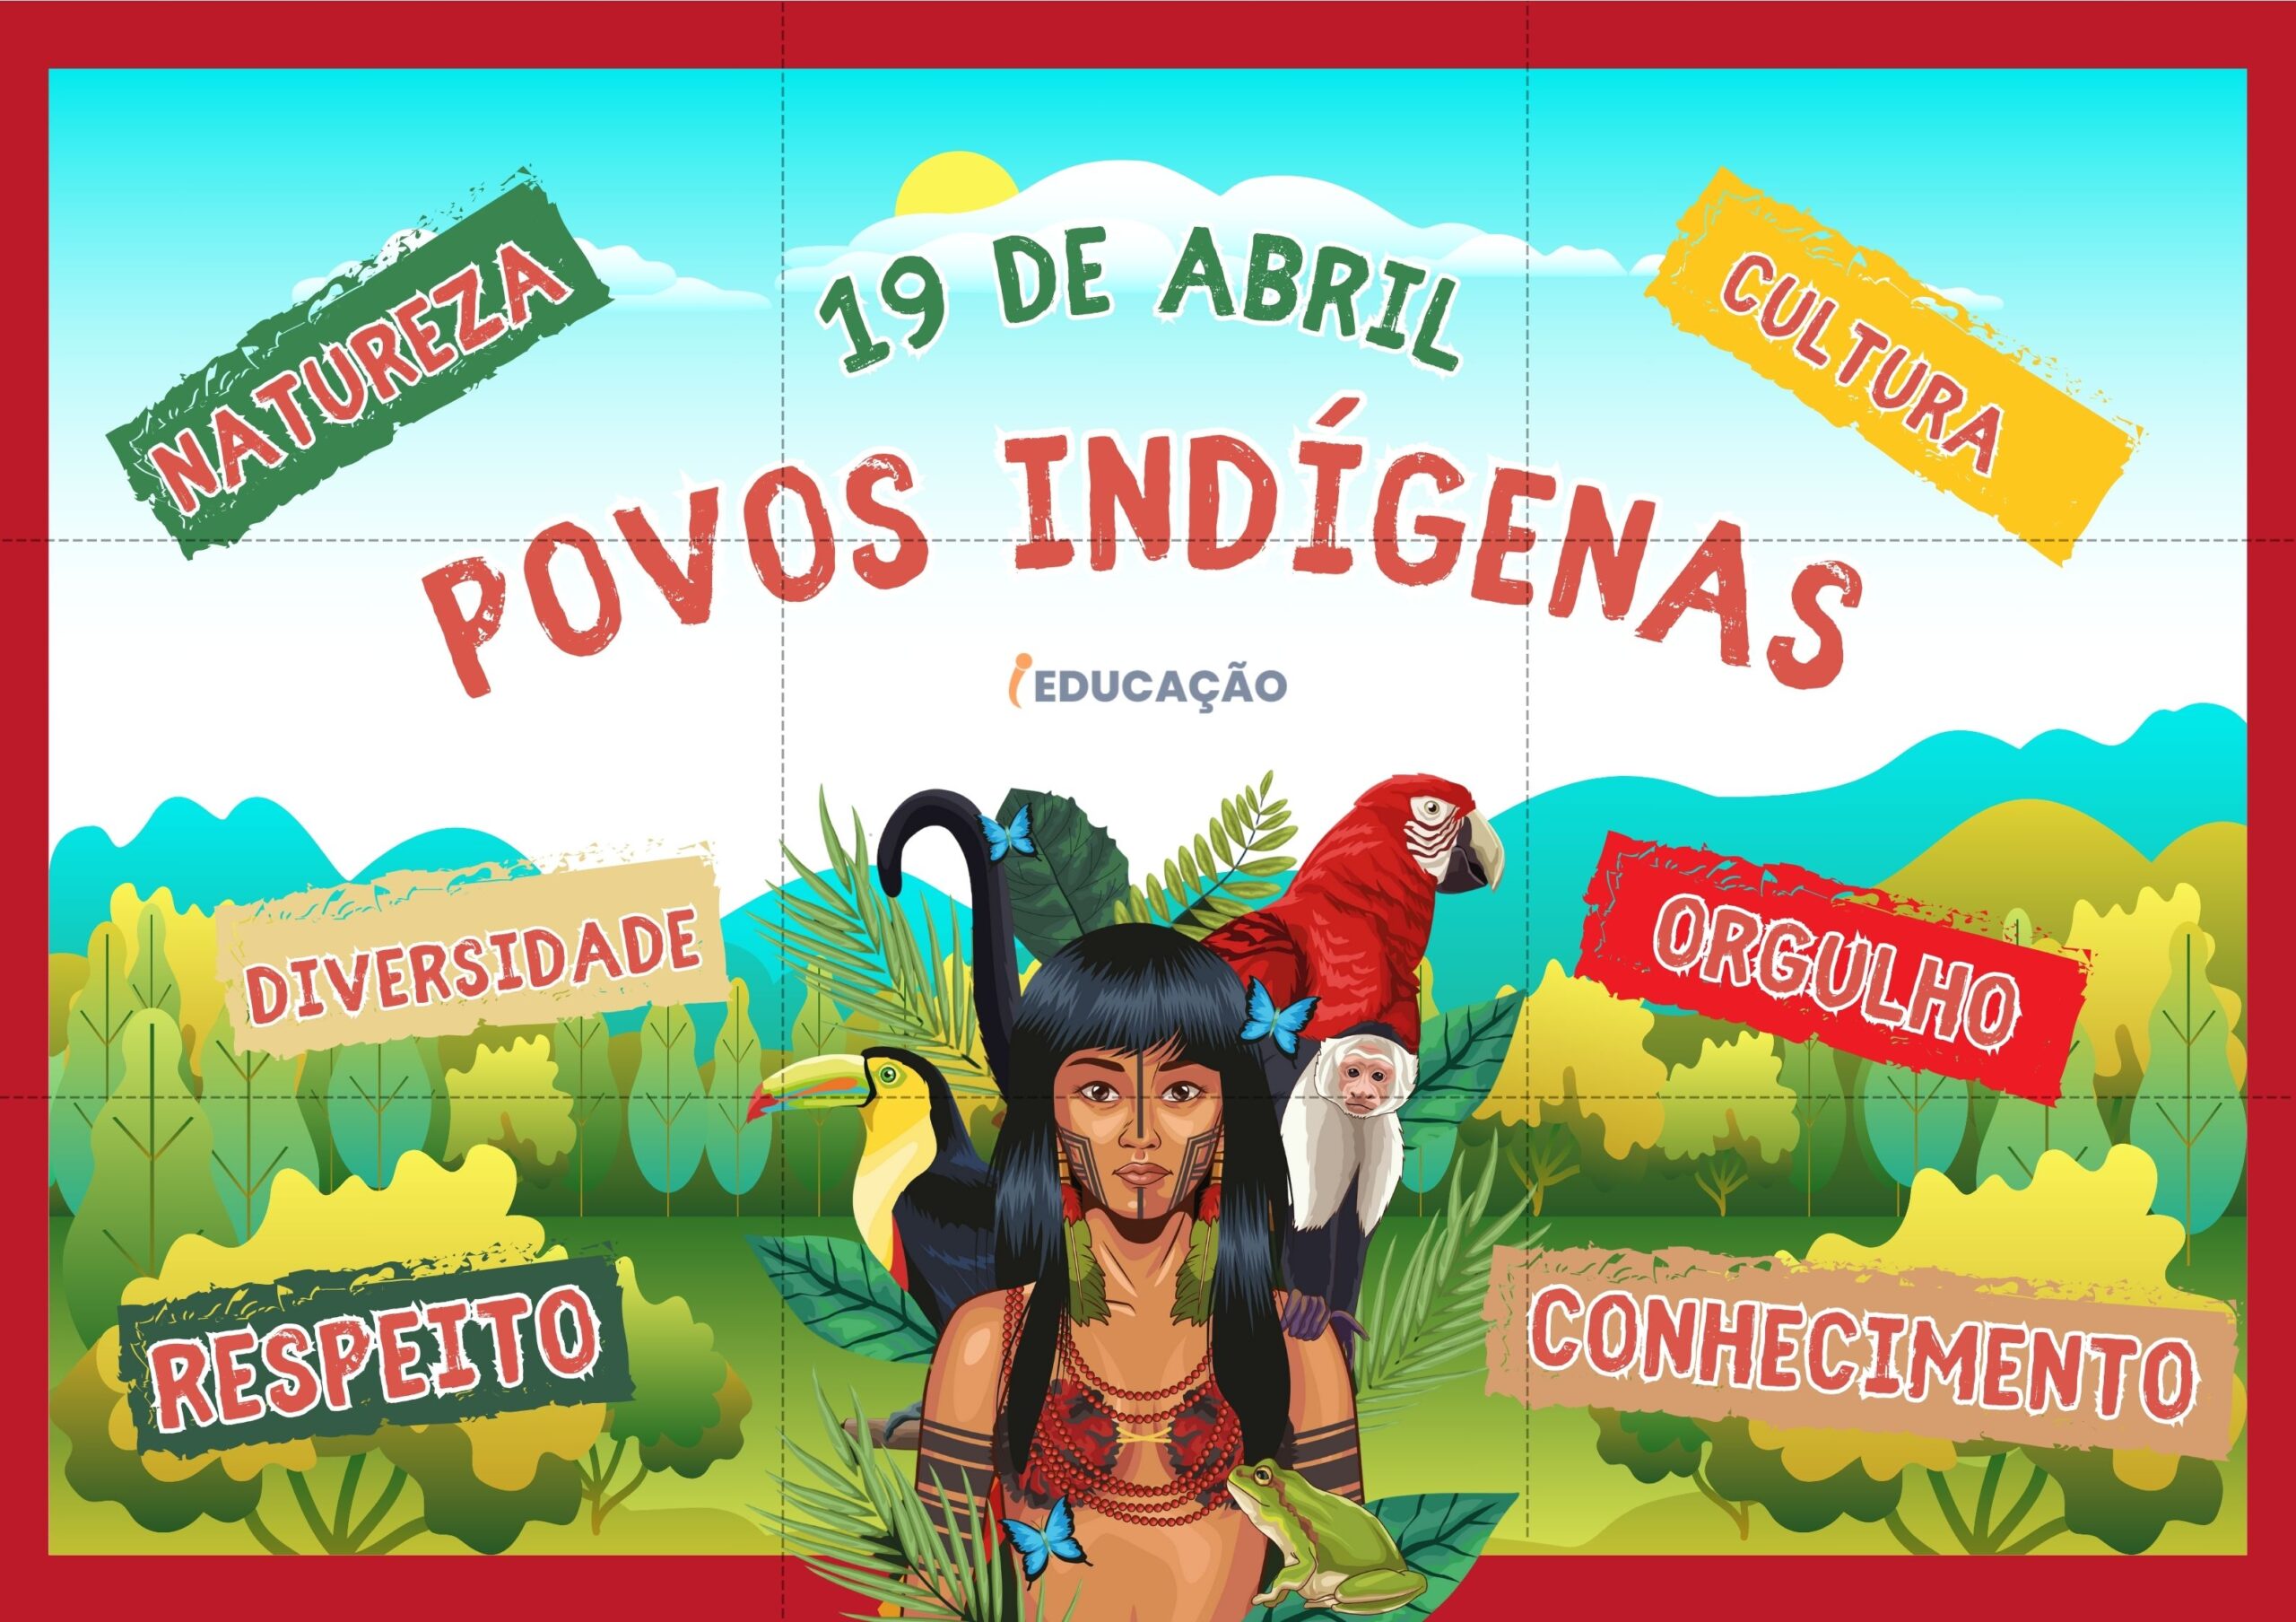 Painel Dia do Índio para imprimir_ Cultura Indígena Brasileira - Painel dos povos indígenas Brasileiros.jpg